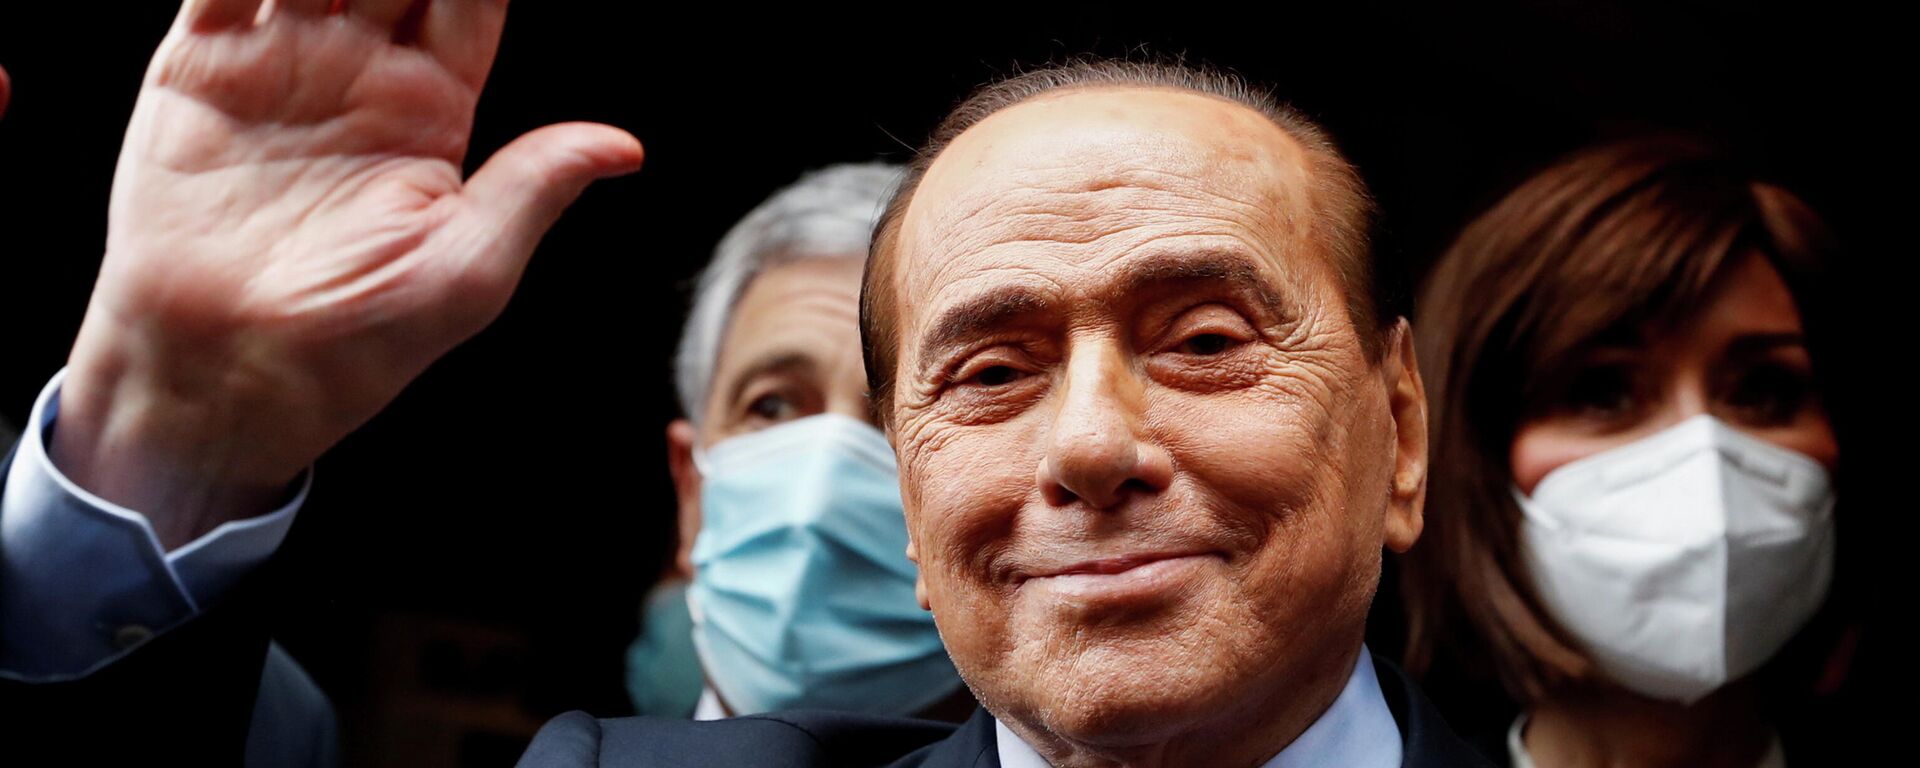 Silvio Berlusconi, ex primer ministro de Italia - Sputnik Mundo, 1920, 27.05.2021